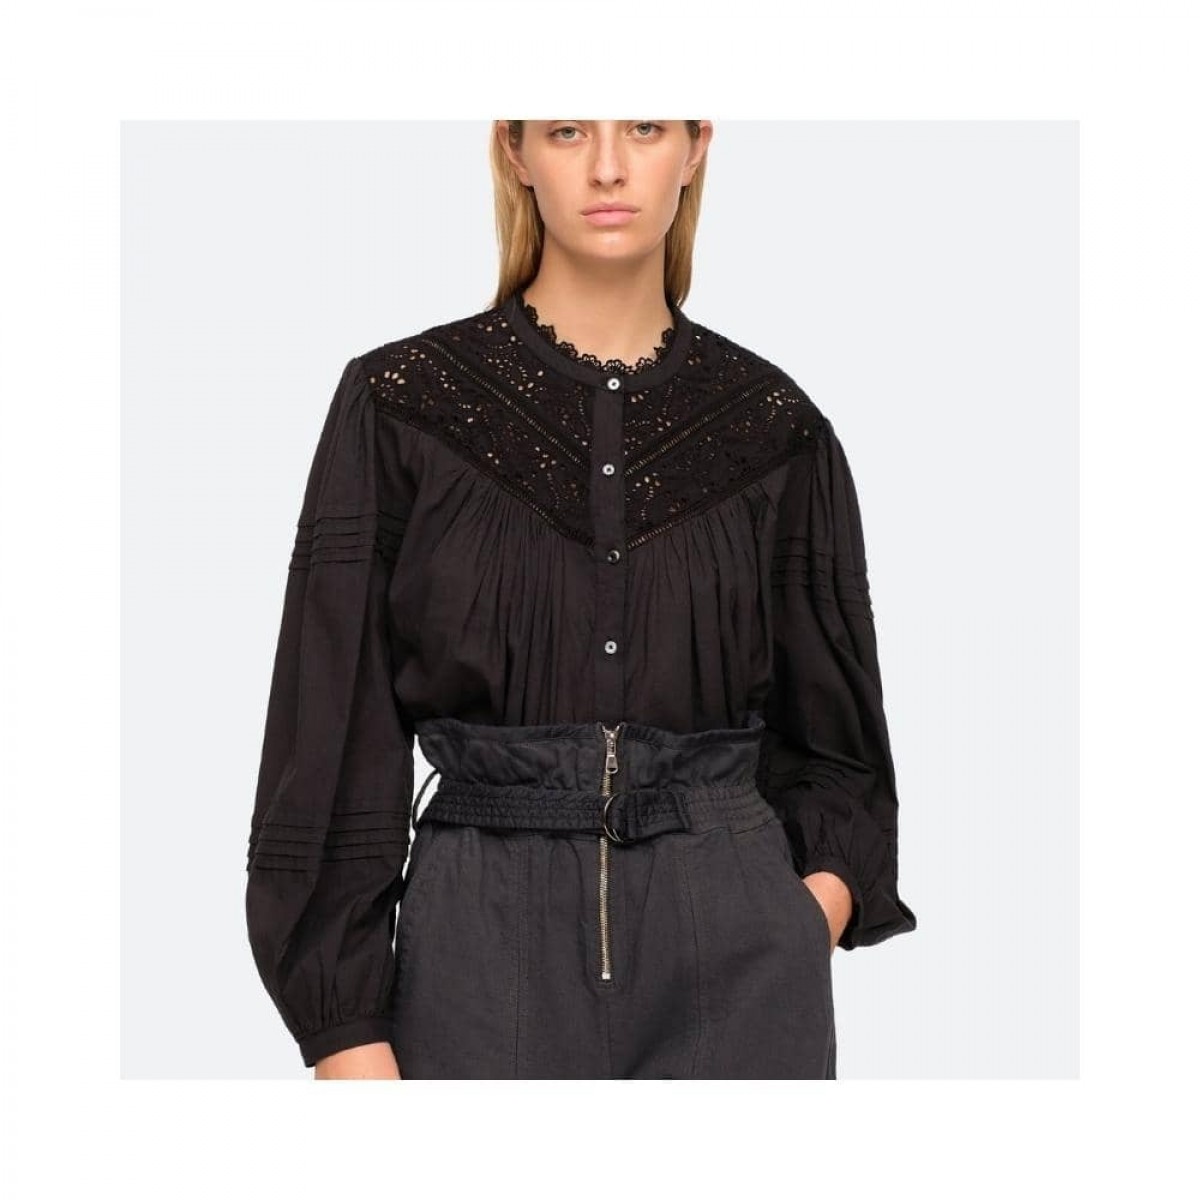 patrizia lace blouse - black - front detalje